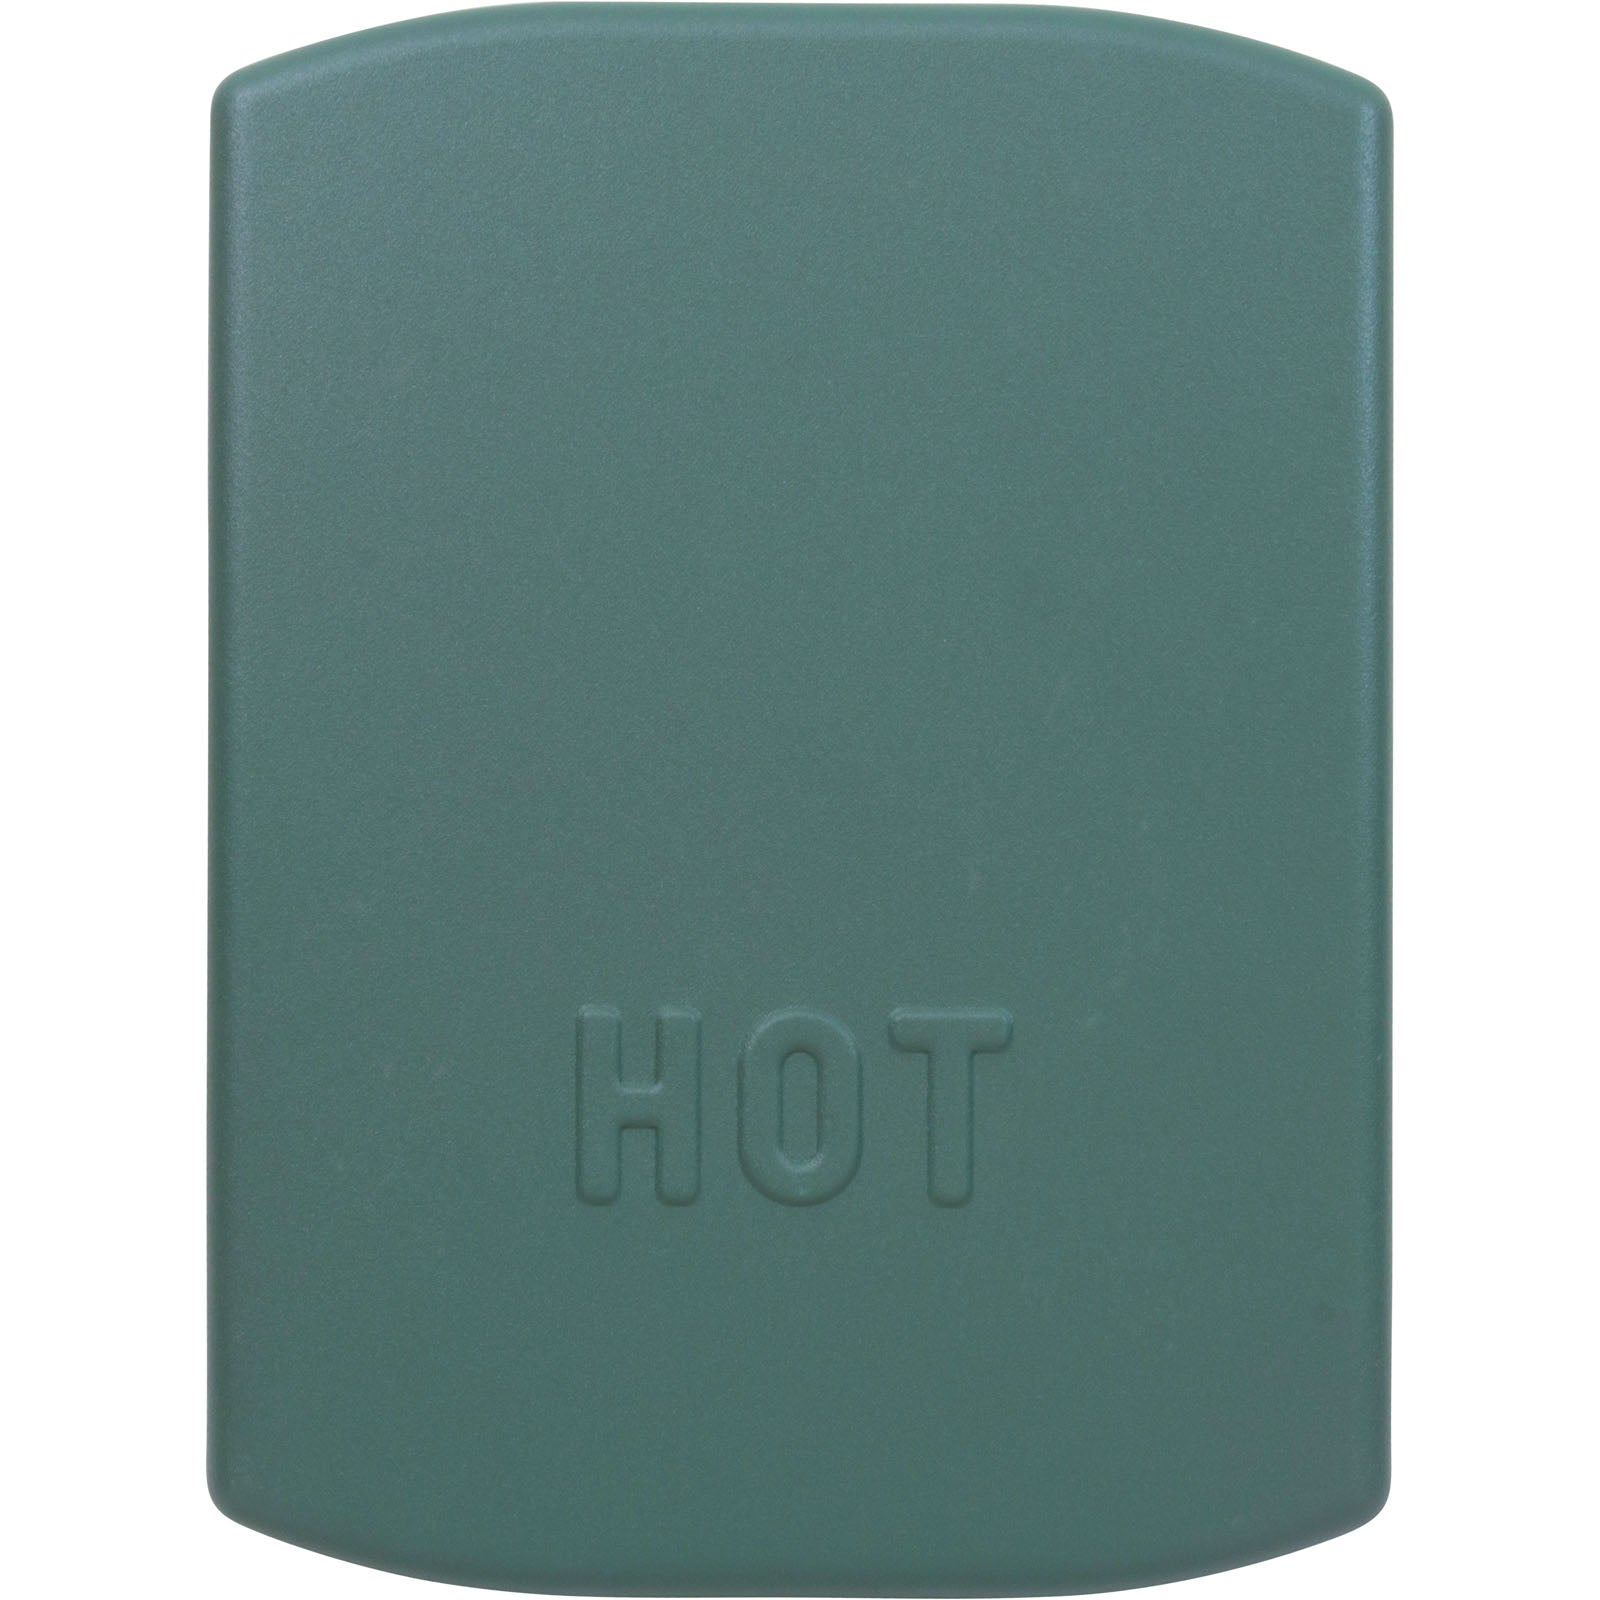 Heater Top, Green, Raypak 010334